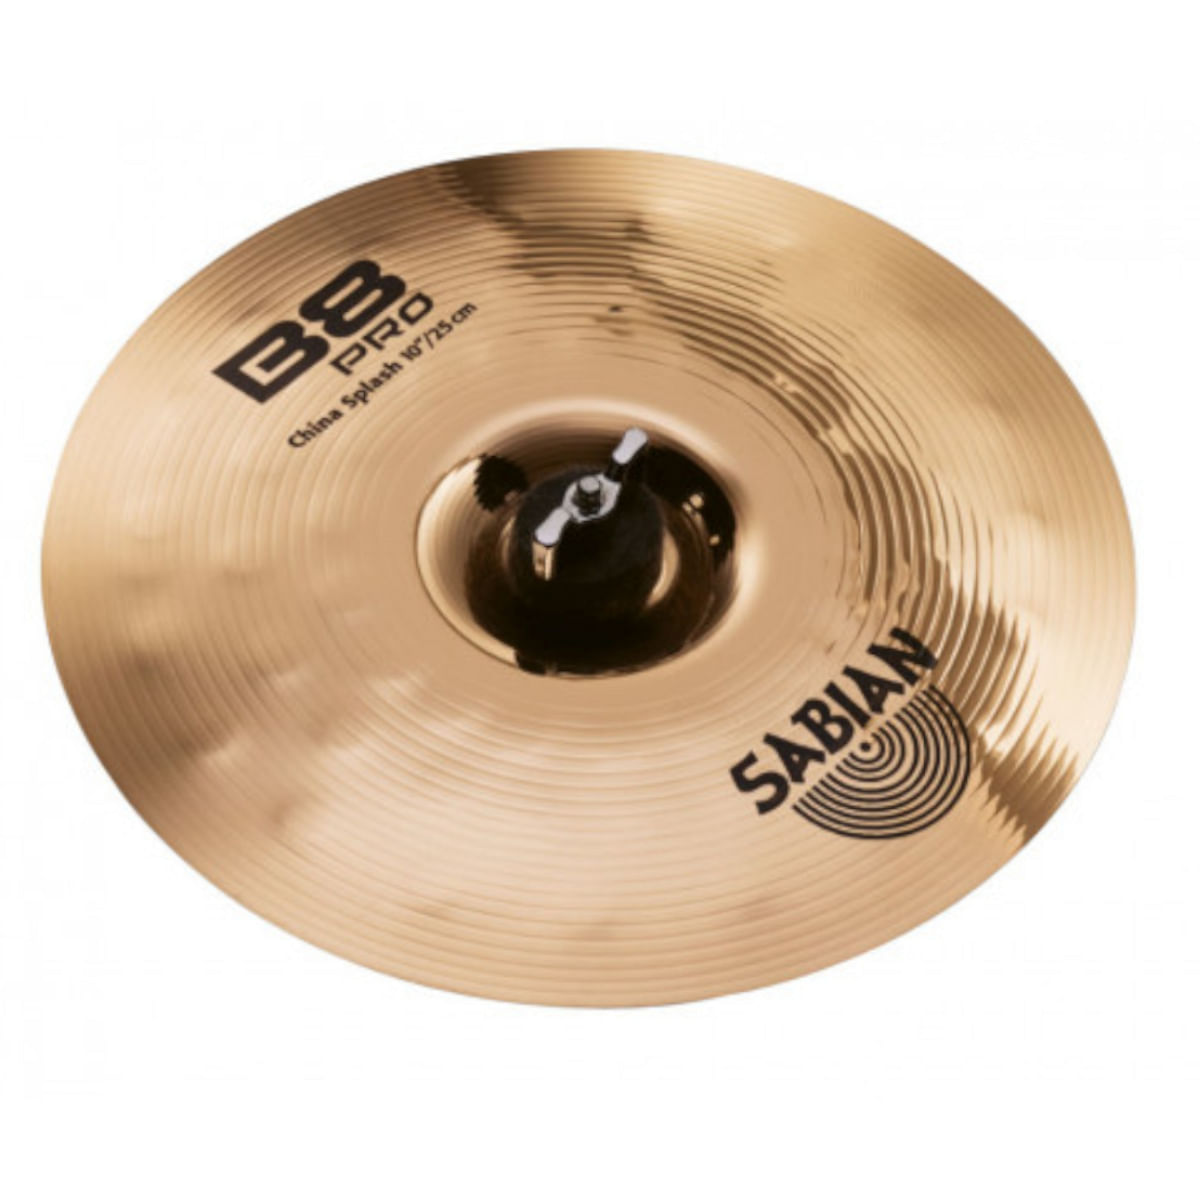 Sabian Cymbals, B8, 10”(25.40 cm) Pro China Splash 31016B